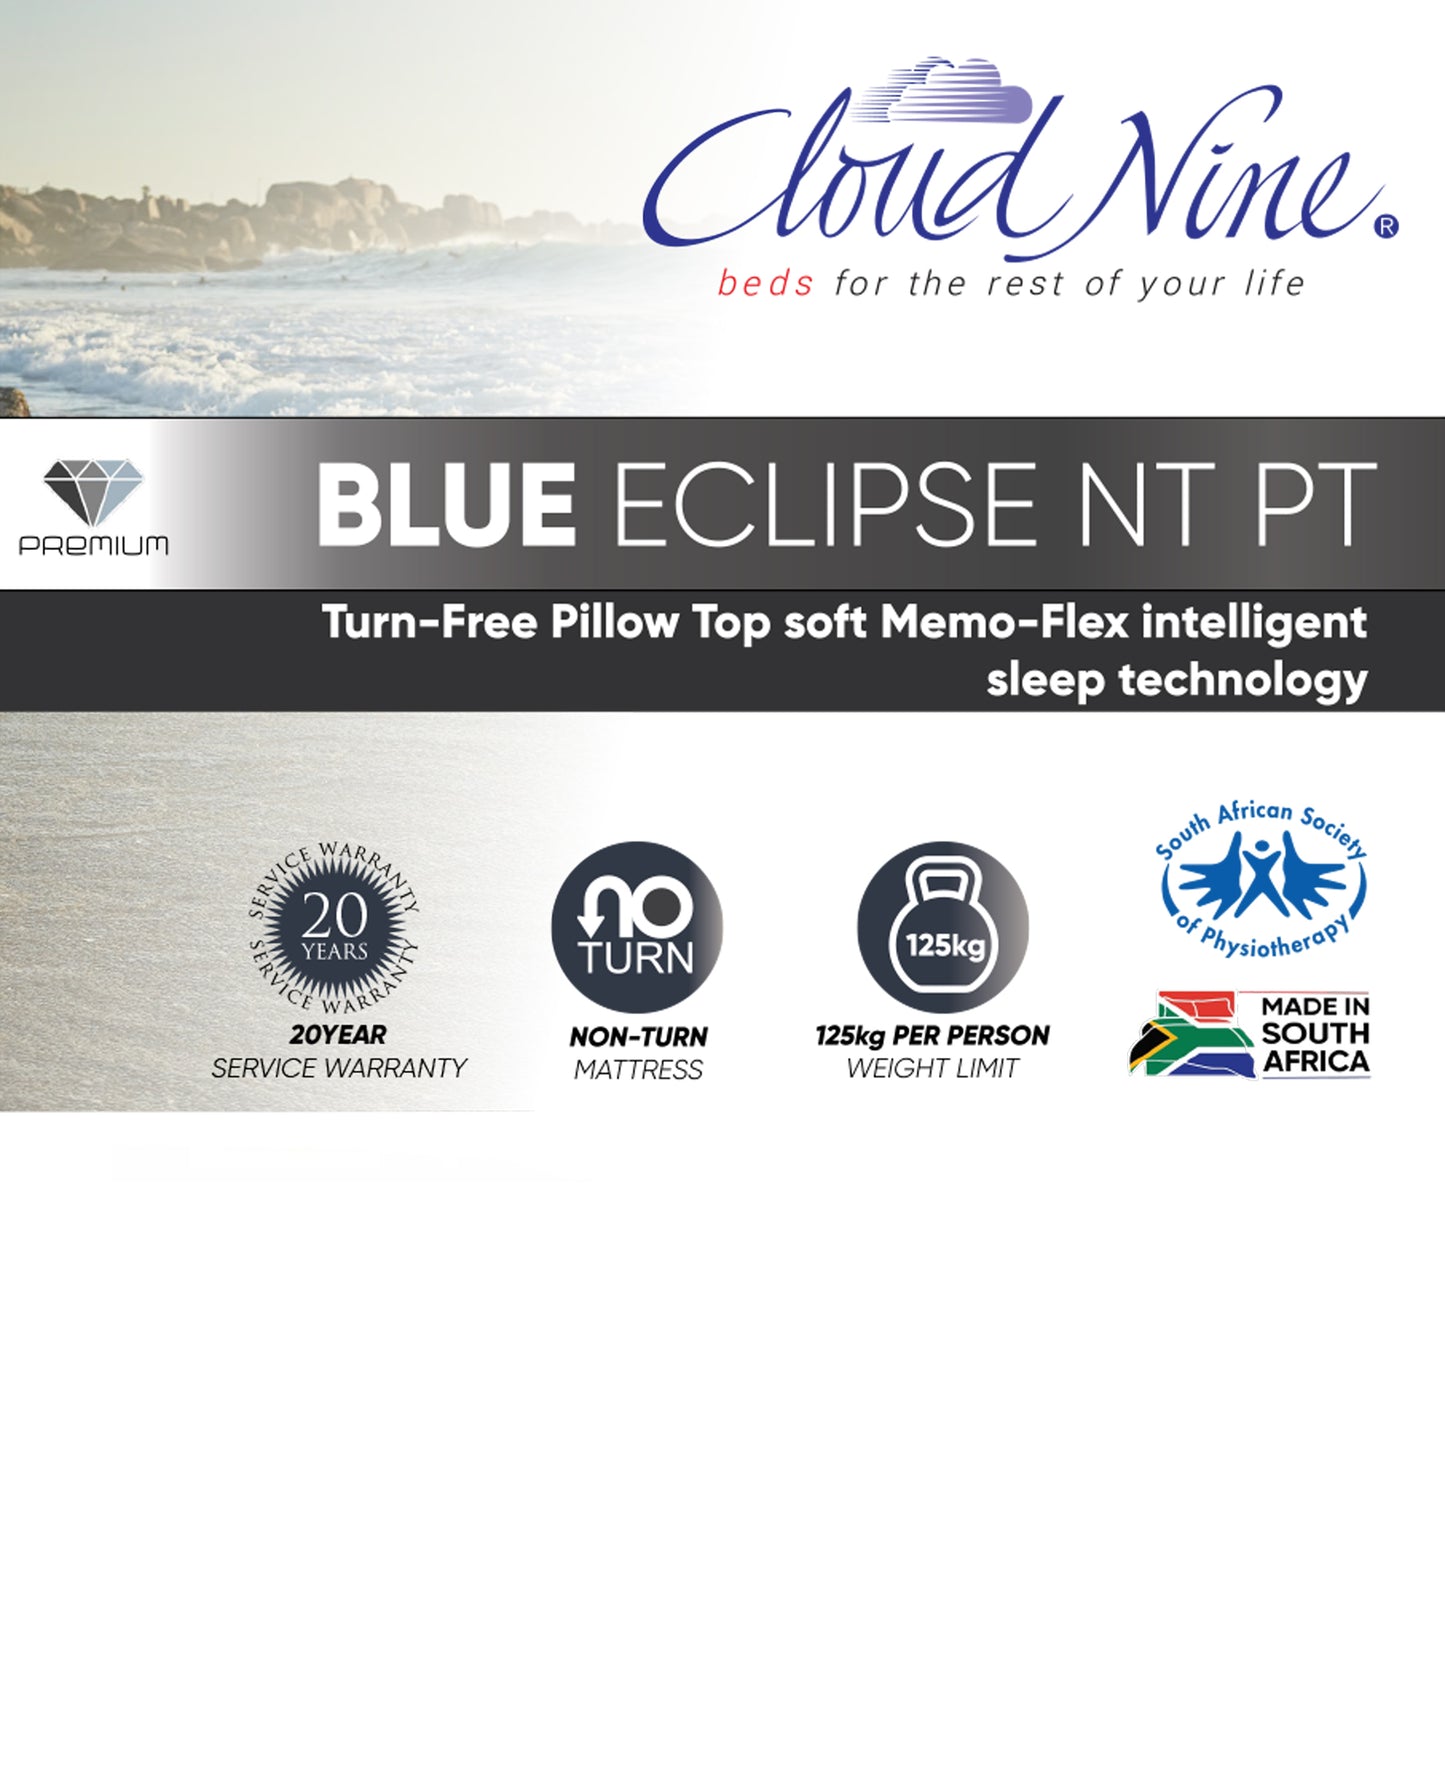 Cloud Nine Blue Eclipse NT PT Bed